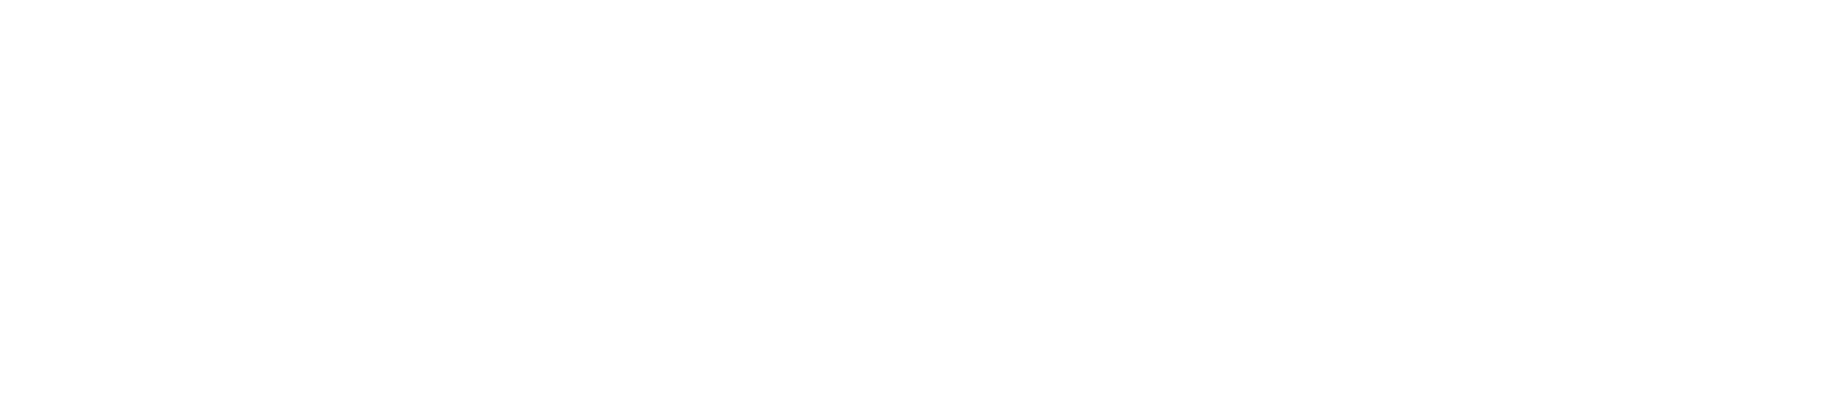 Bracalente Manufacturing Group od 1950